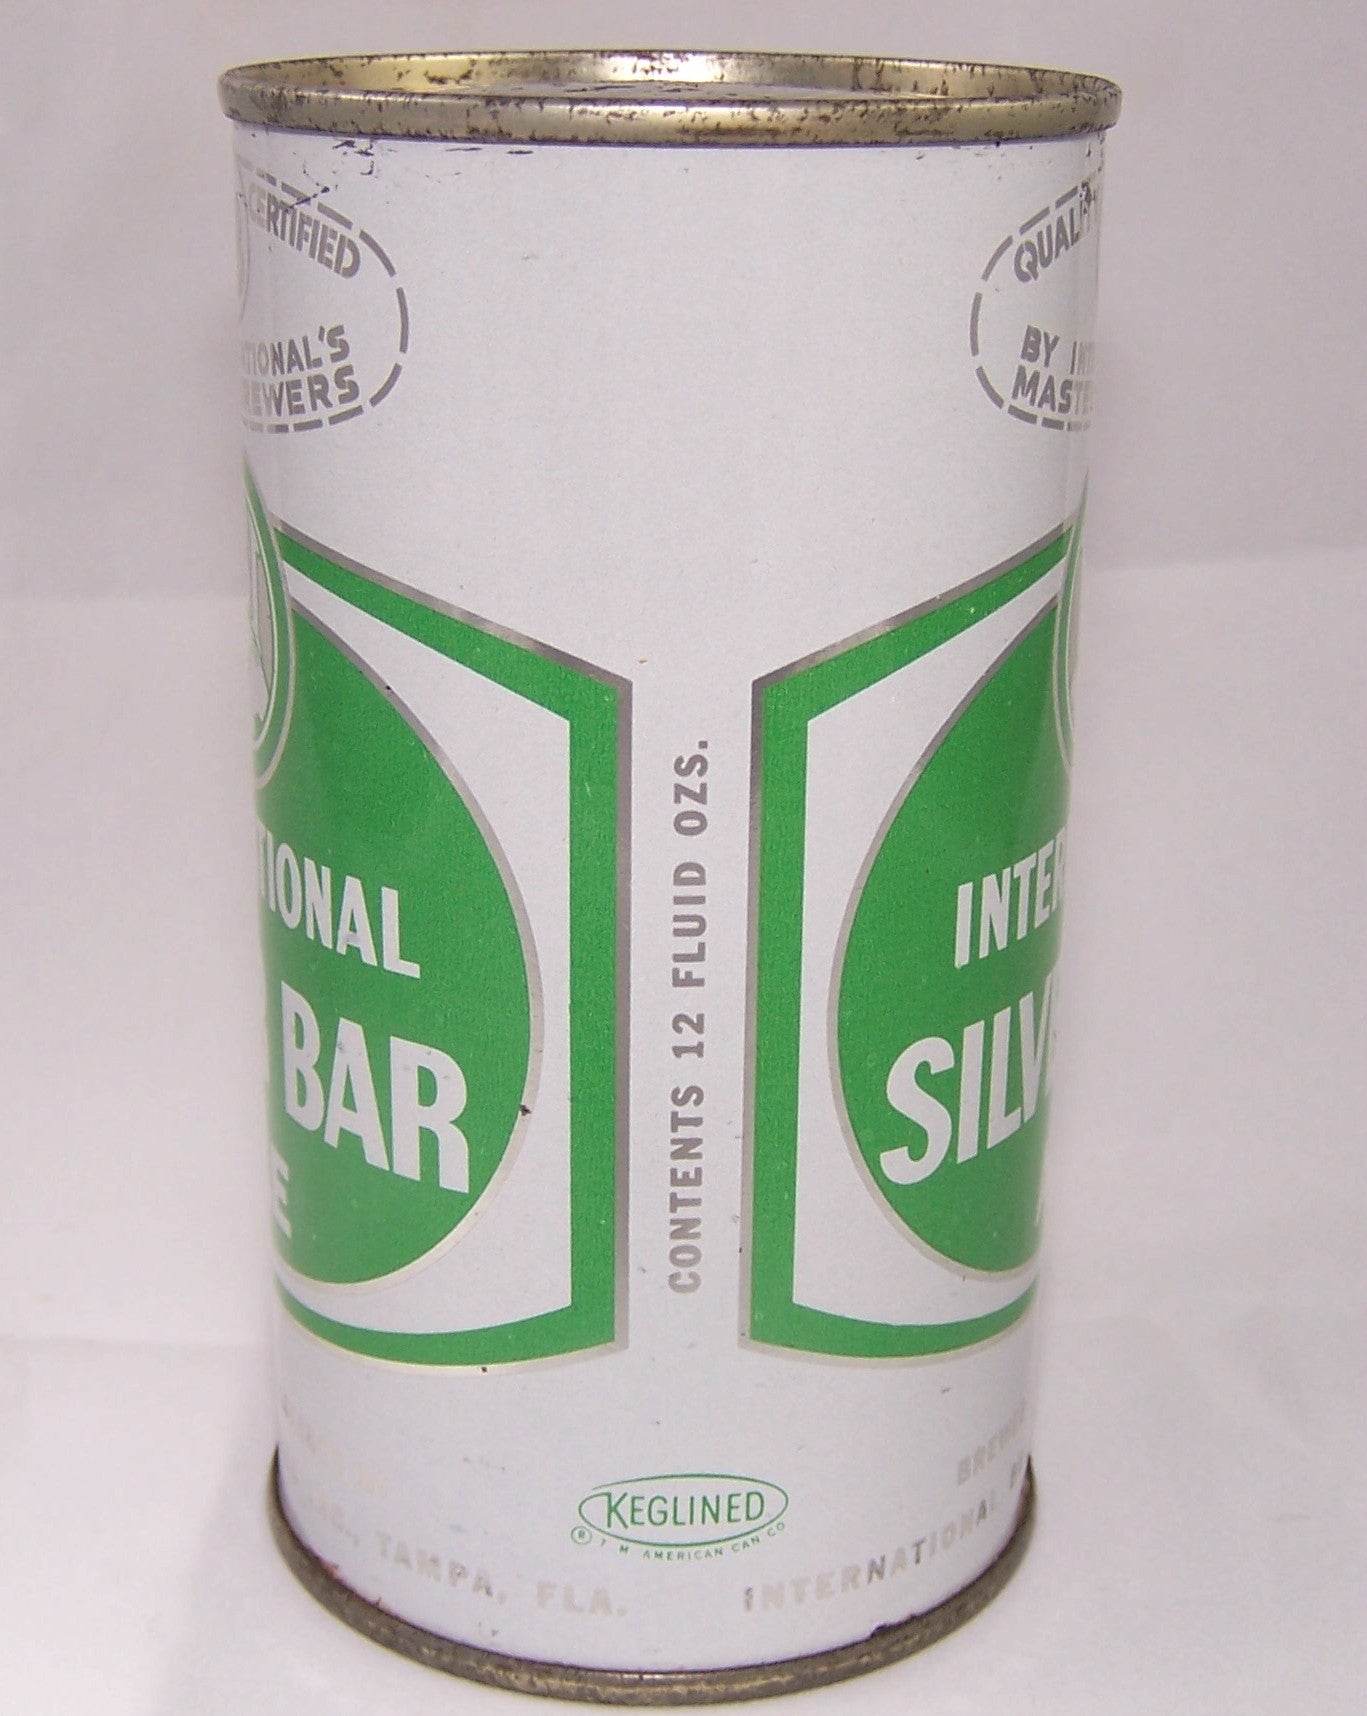 International Silver Bar Ale, USBC 85-17, Grade 1/1+  Sold on 05/20/18